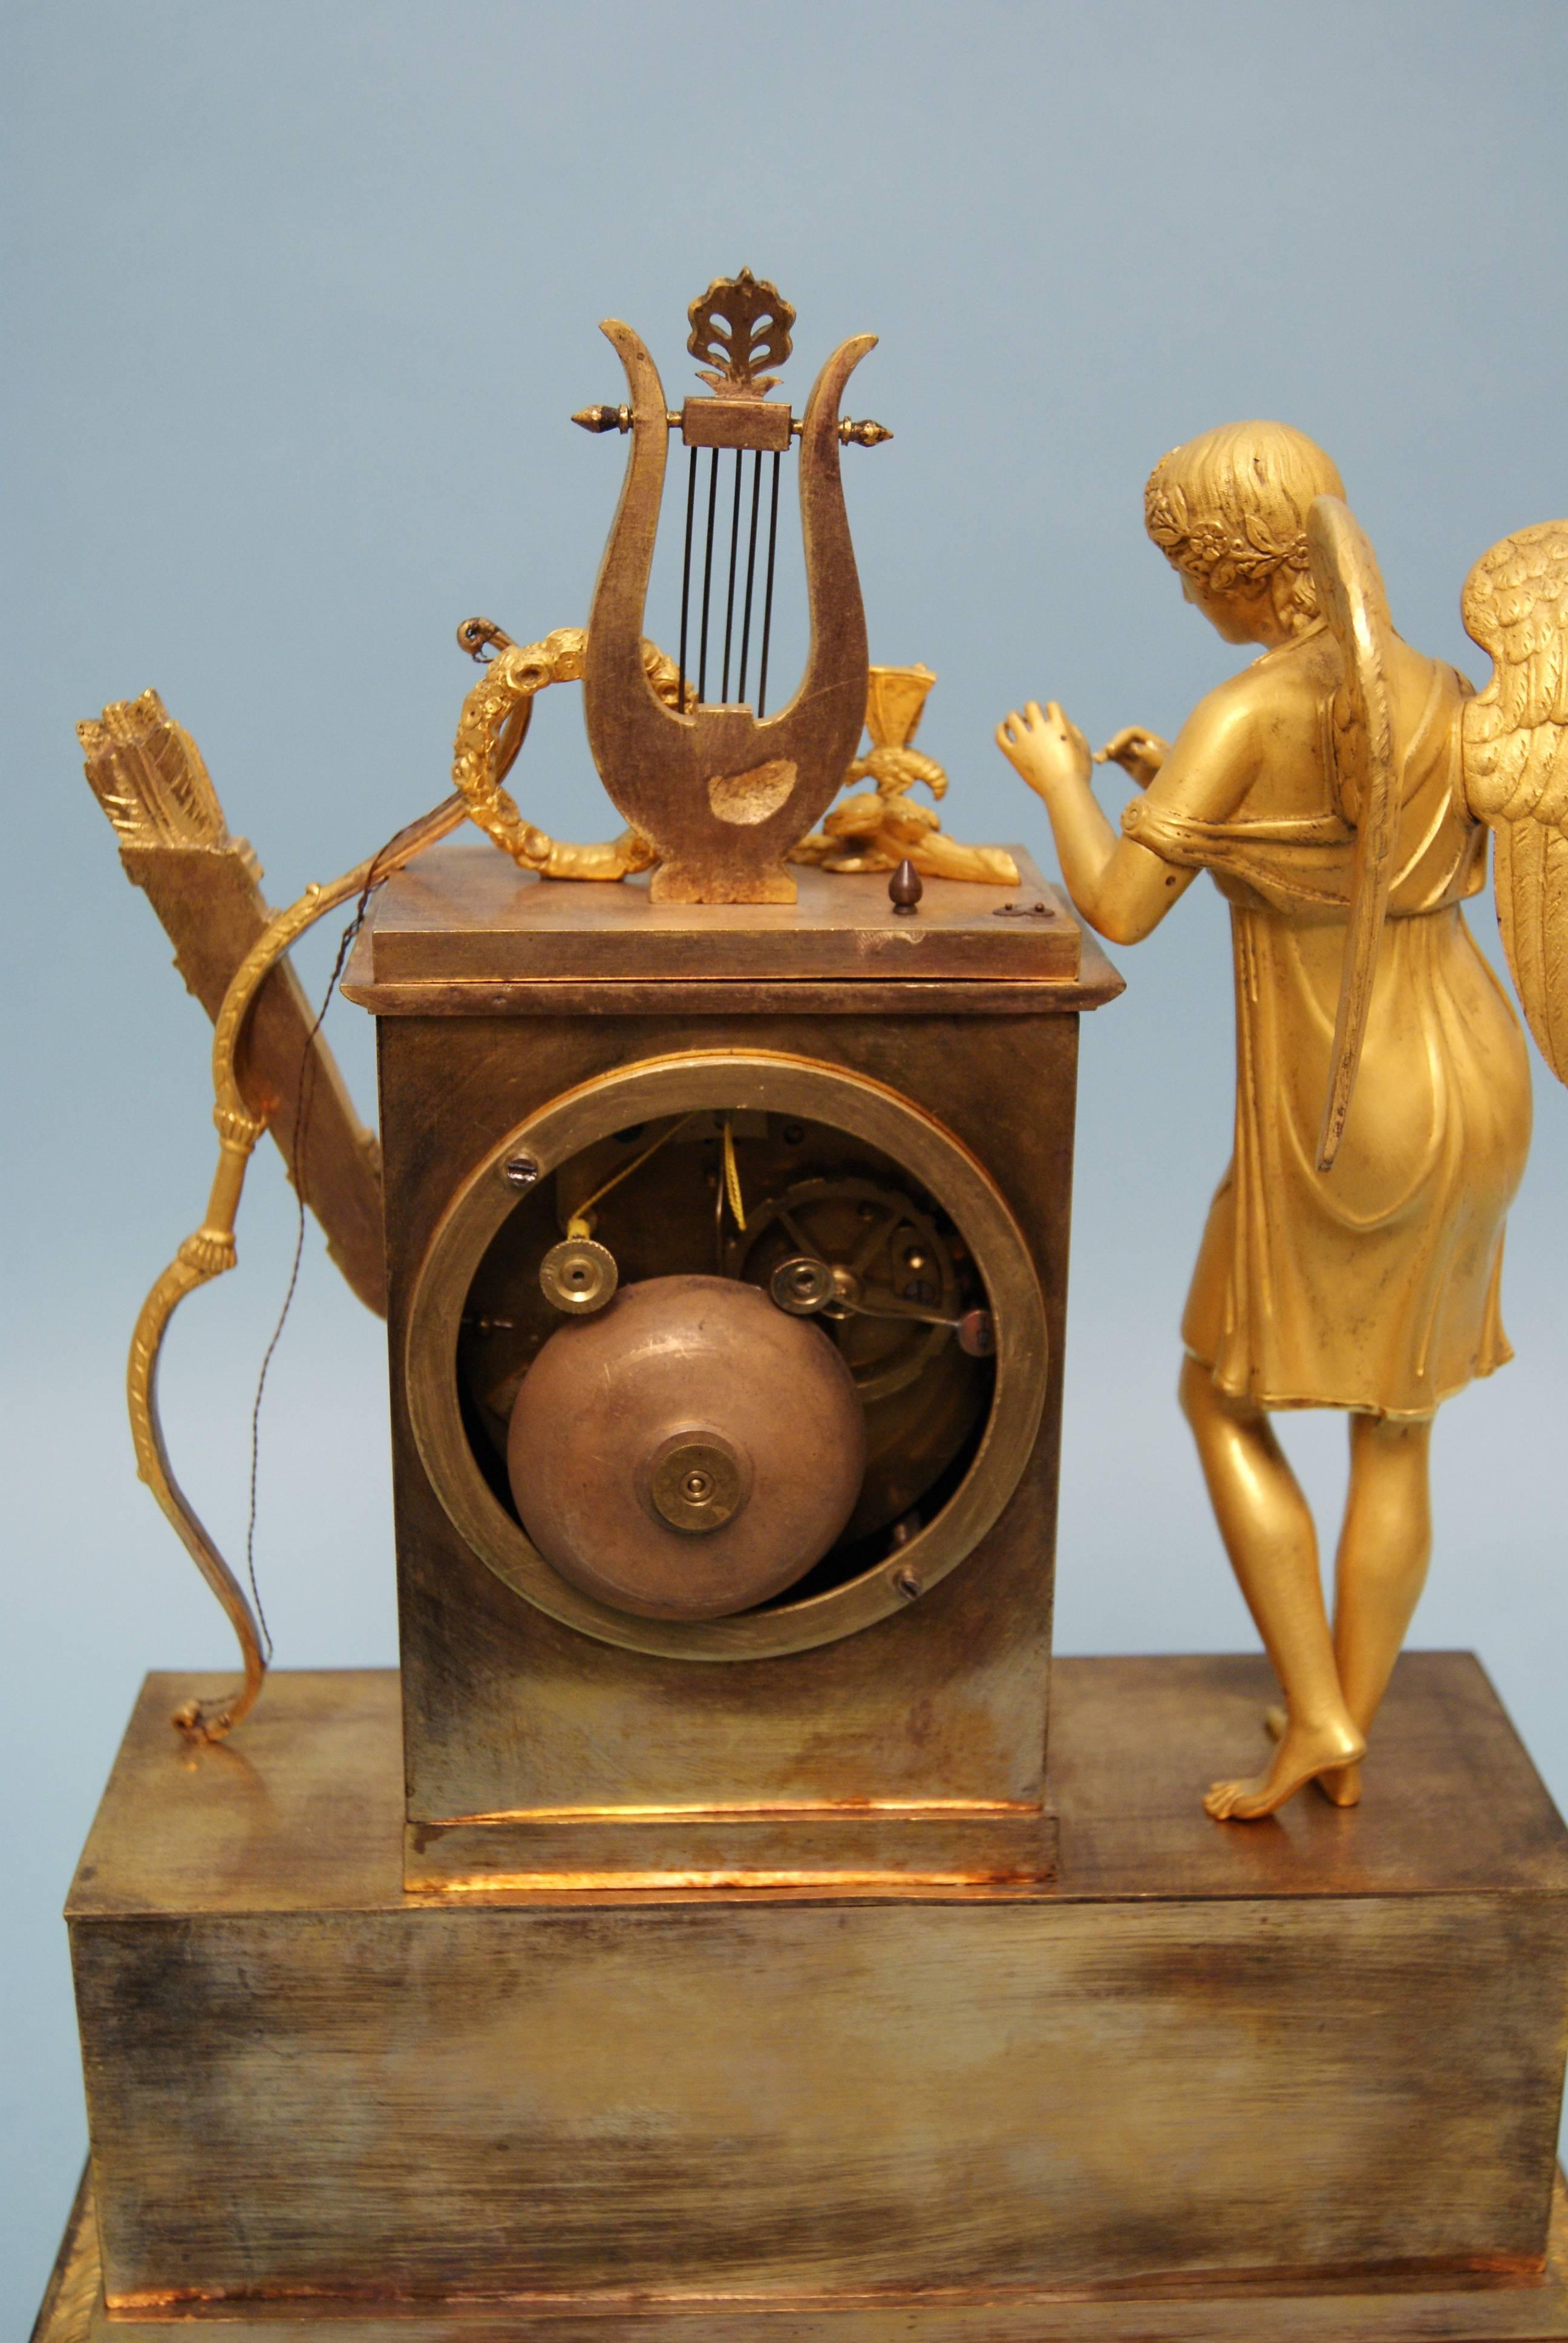 19th Century French Ormolu Mantle Clock with God Apoll Era Louis-Philippe I, circa 1840